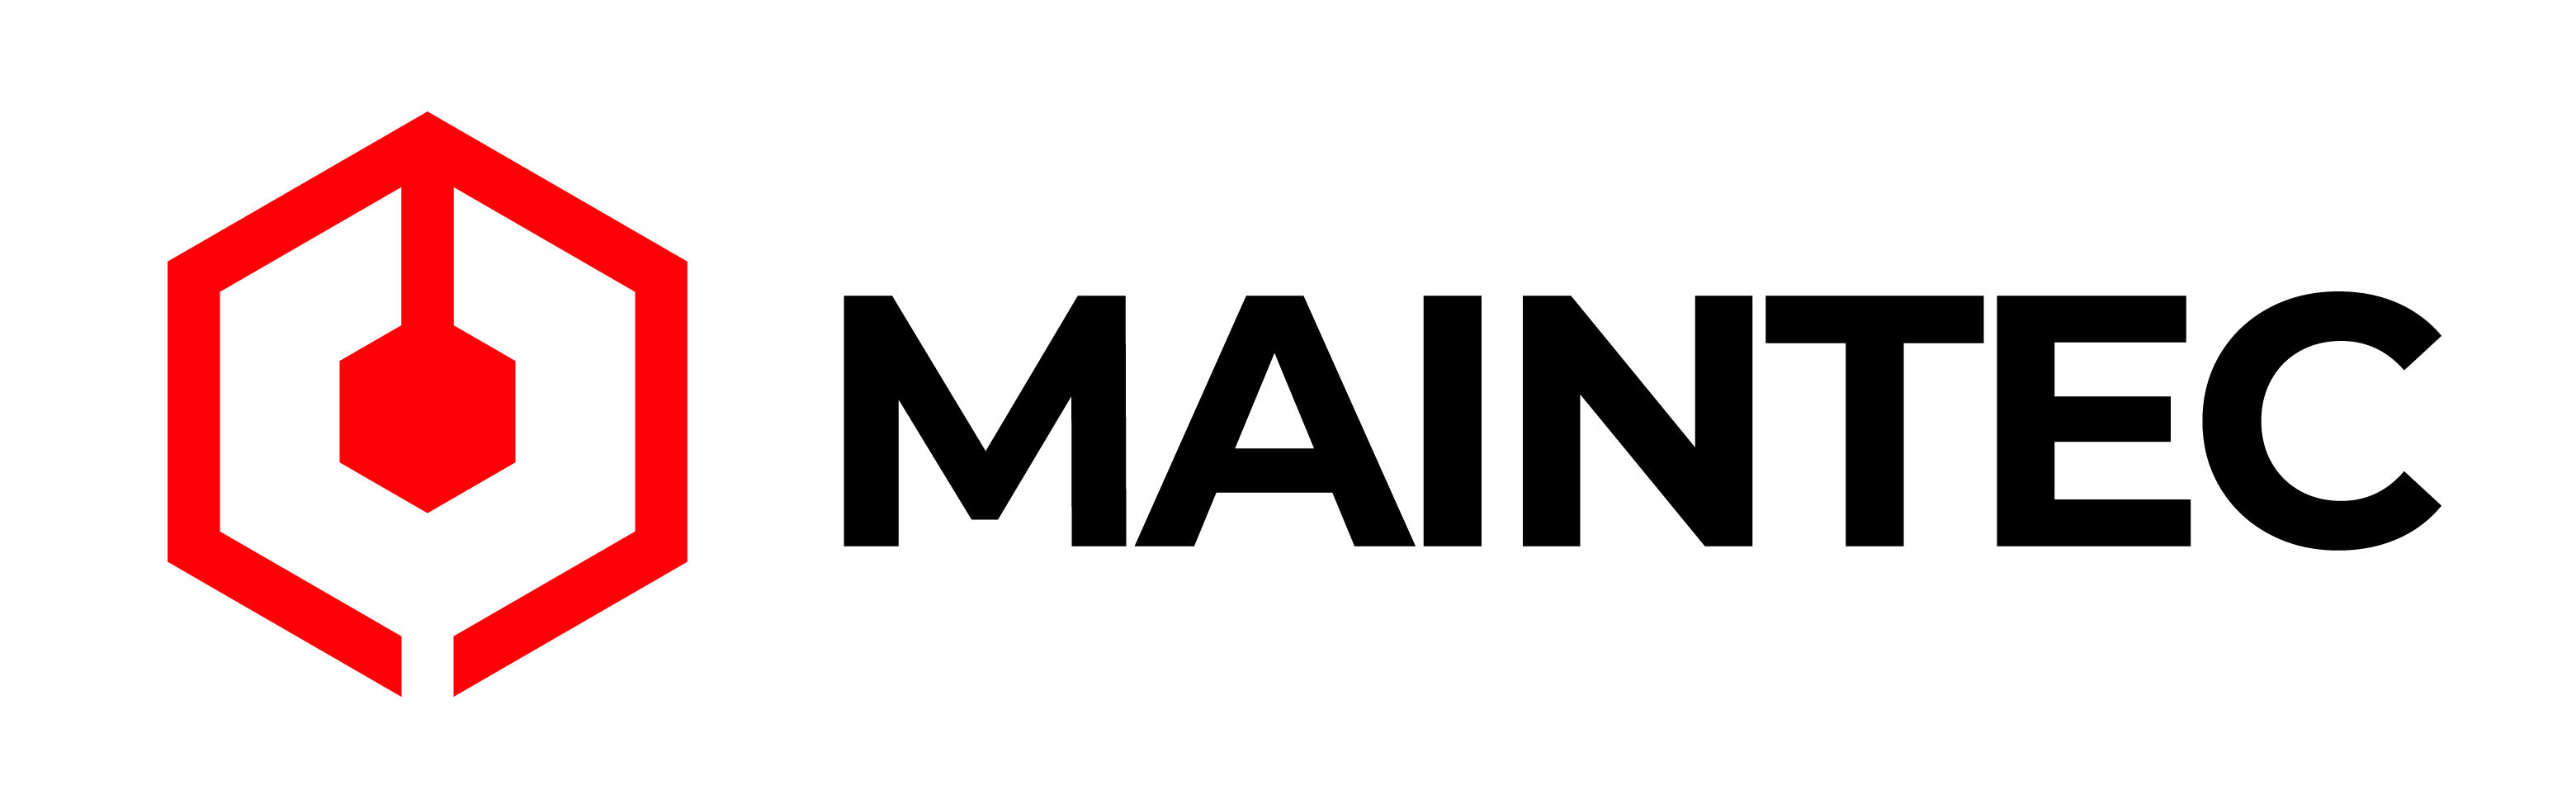 Maintec_Logo - Nineteen Group.jpg